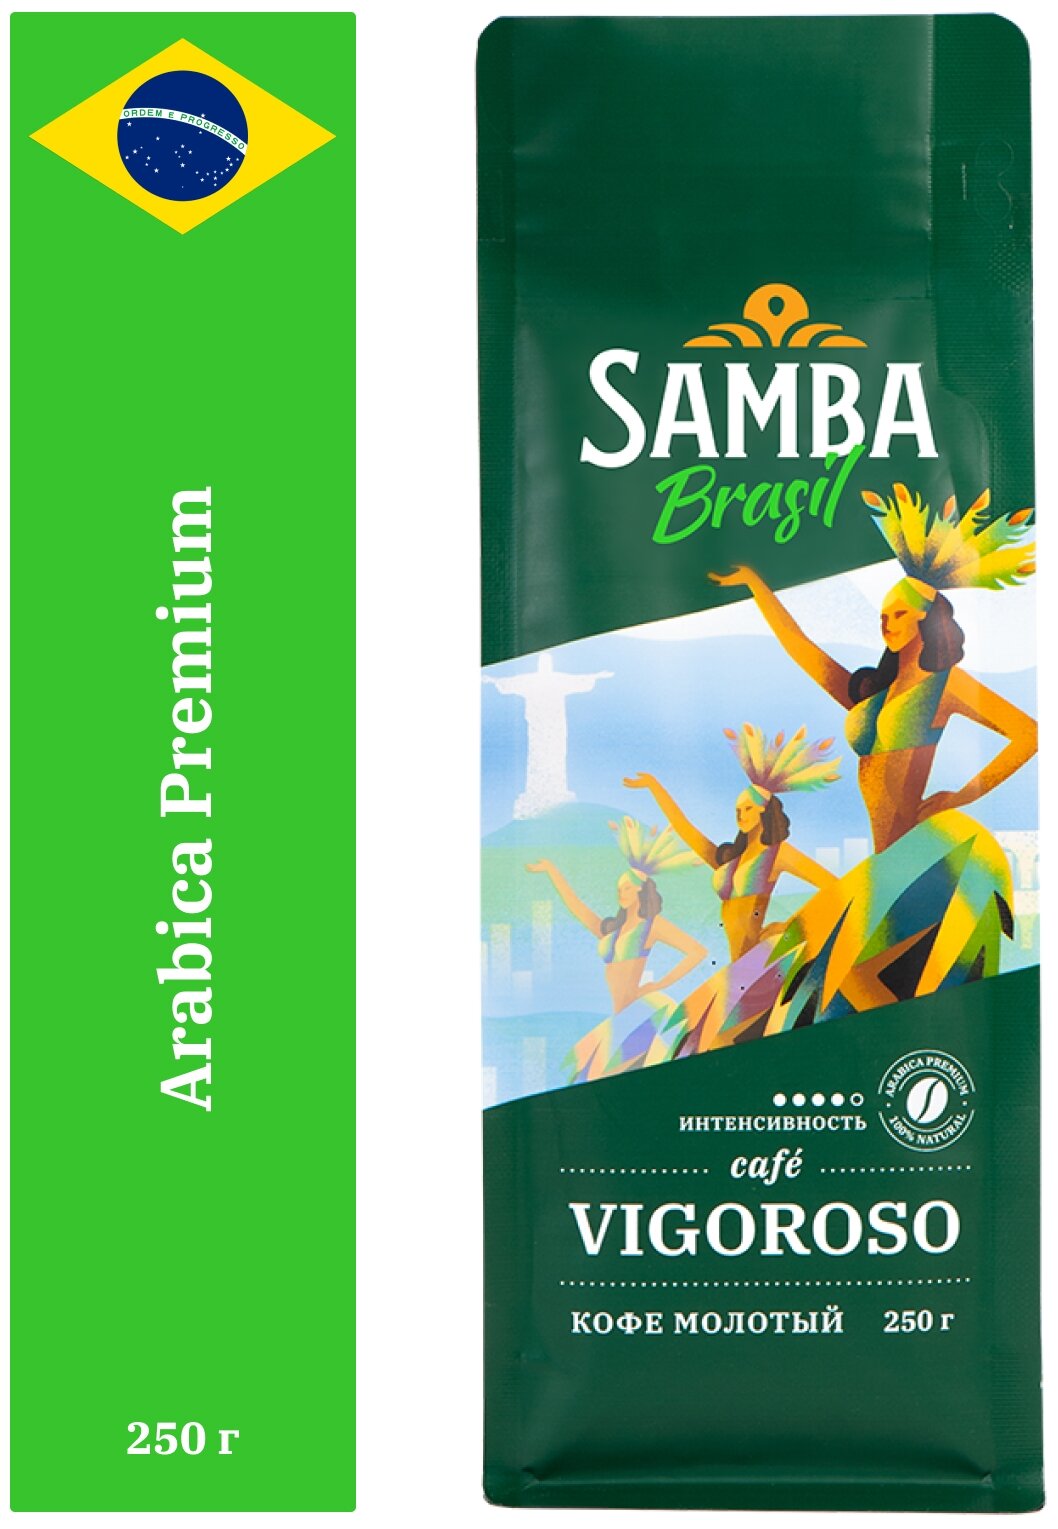 Кофе молотый Samba Cafe Brasil VIGOROSO, арабика, робуста, средняя обжарка, 250 гр - фотография № 2